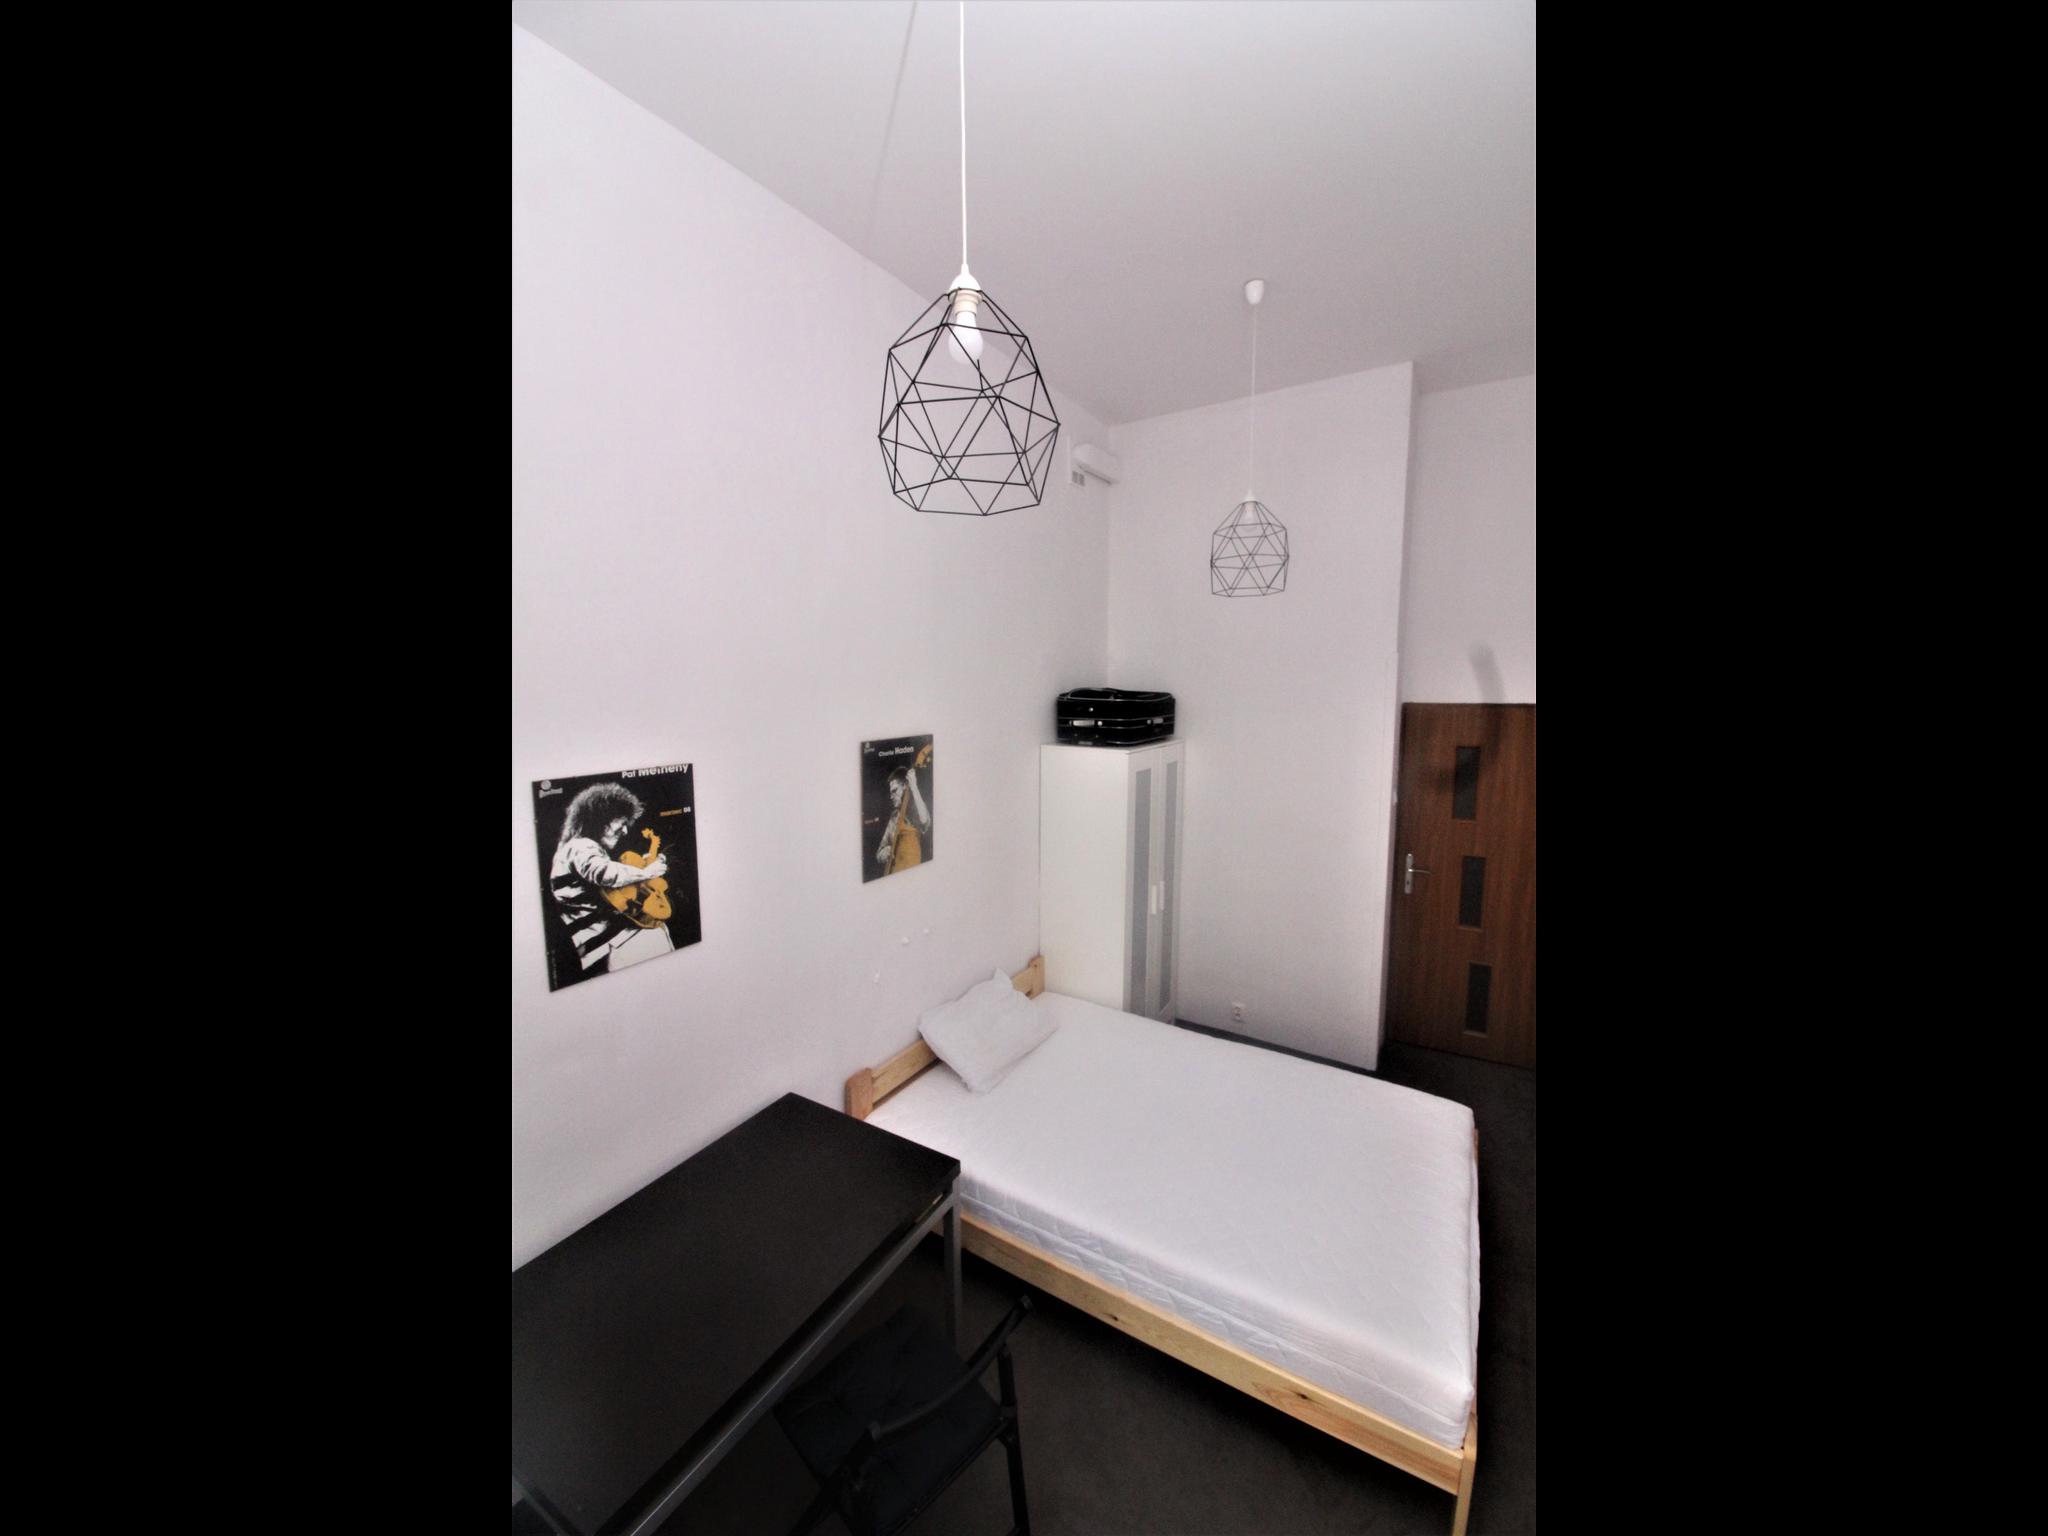 Agnieszki - 5 bedroom apartment in Krakow